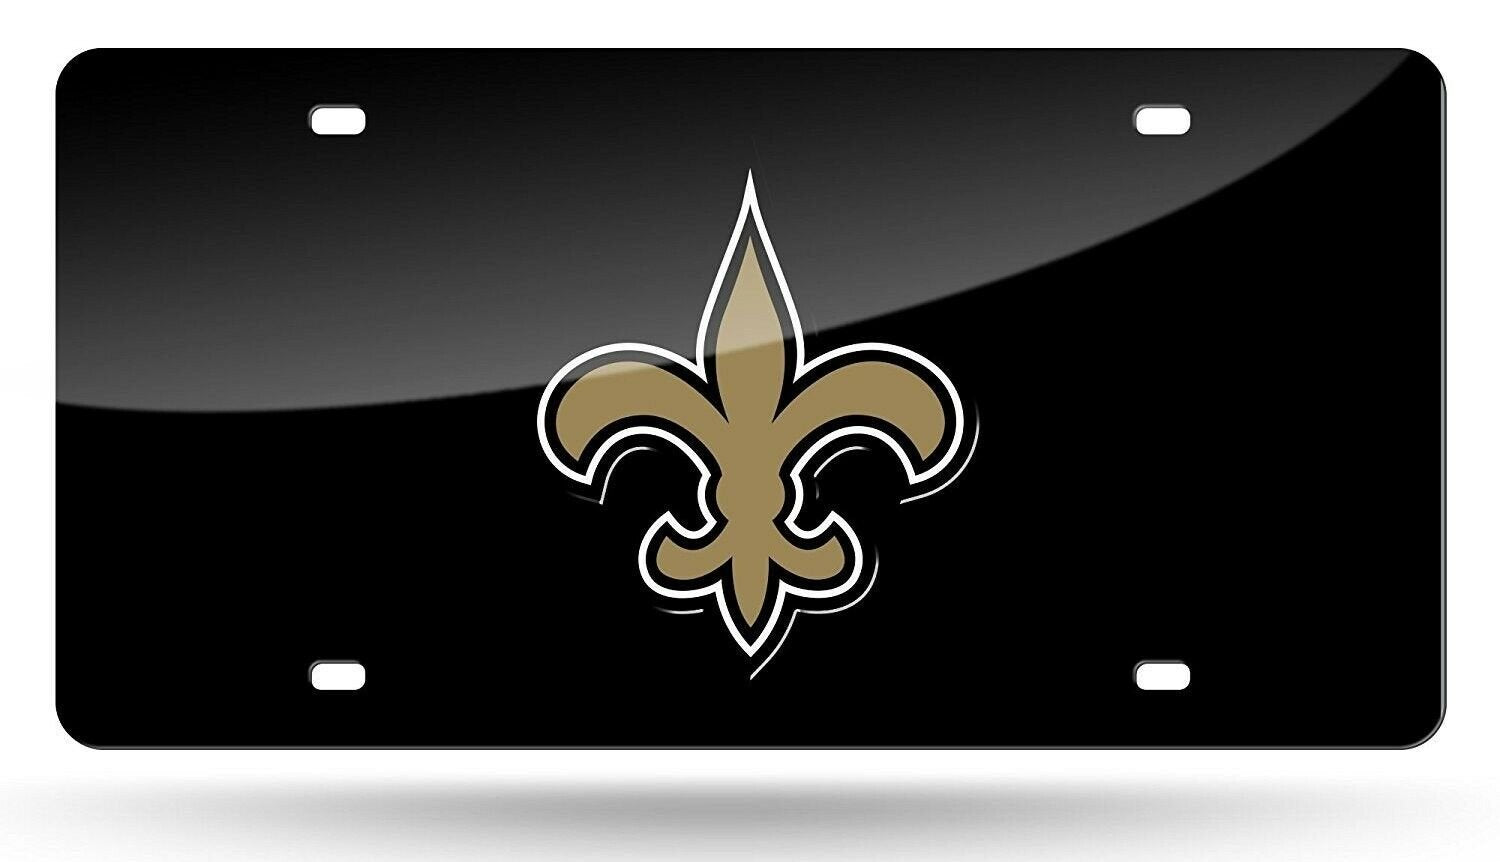 New Orleans Saints Premium Laser Cut Tag License Plate, Black Fleur De Lis, Mirrored Inlaid Acrylic, 12x6 Inch